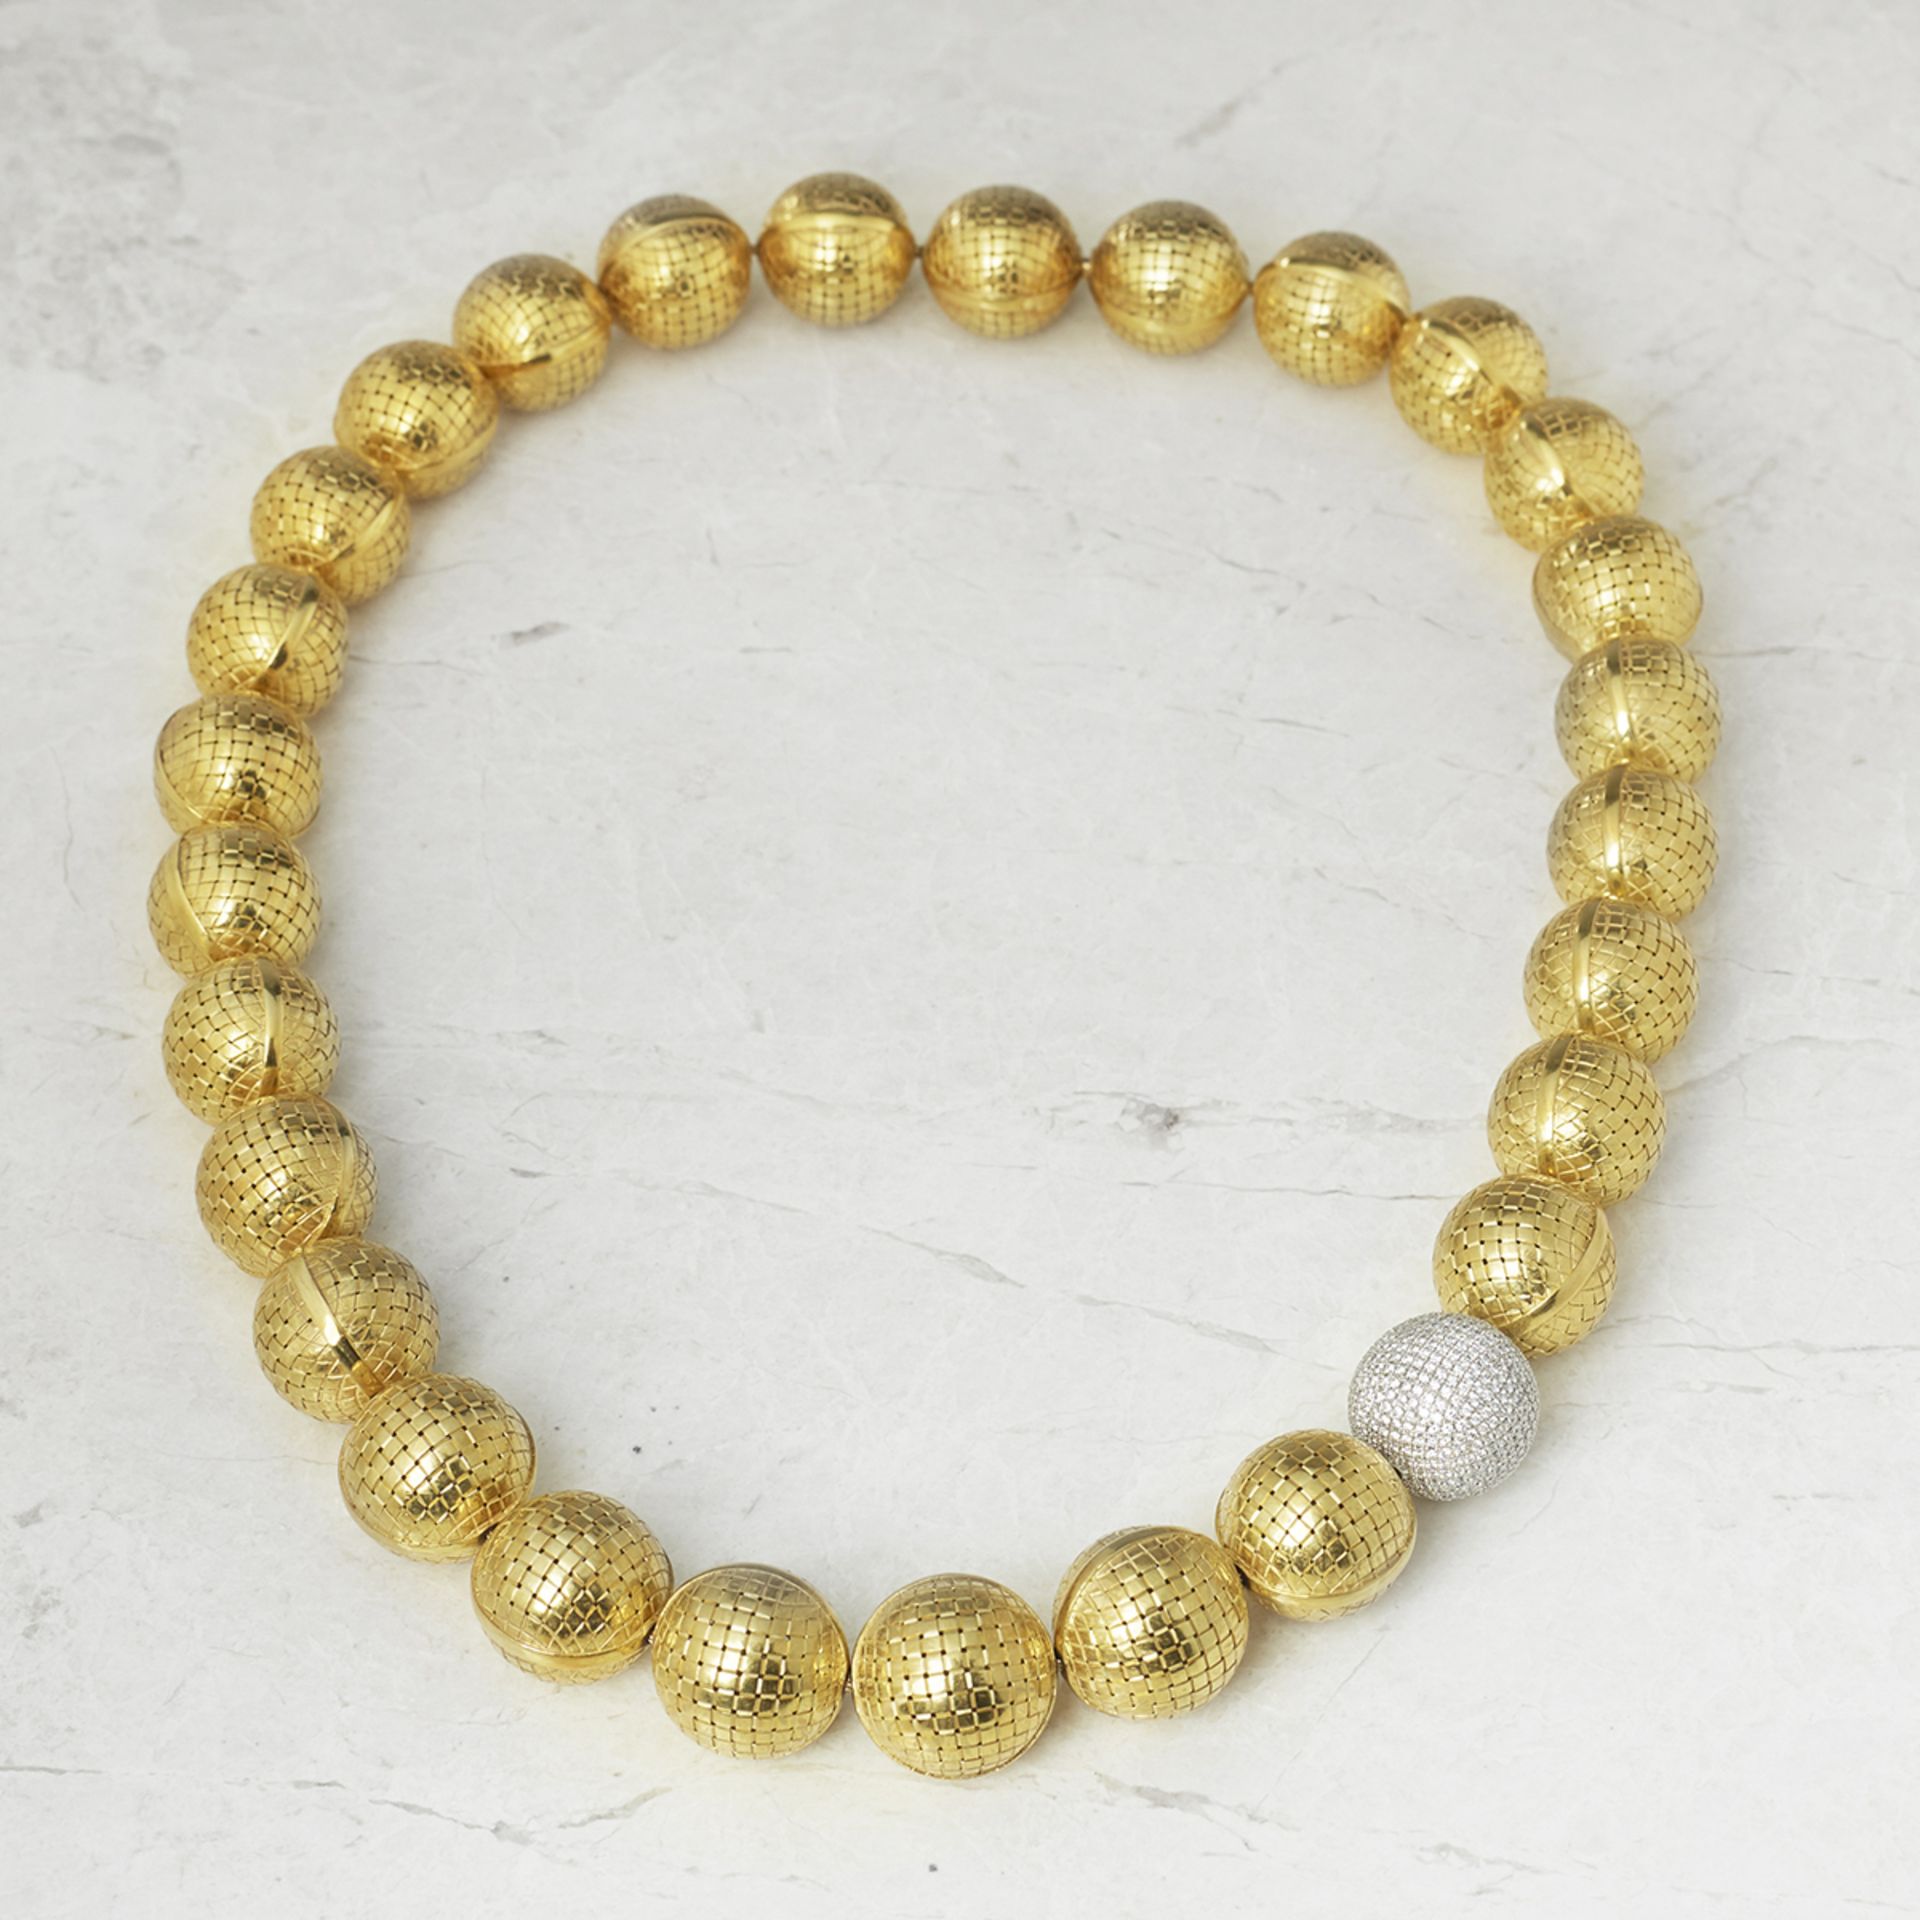 Bottega Veneta 18k Yellow & White Gold Diamond Necklace, Earrings & Ring Sfera Suite - Box & Certs - Image 2 of 21